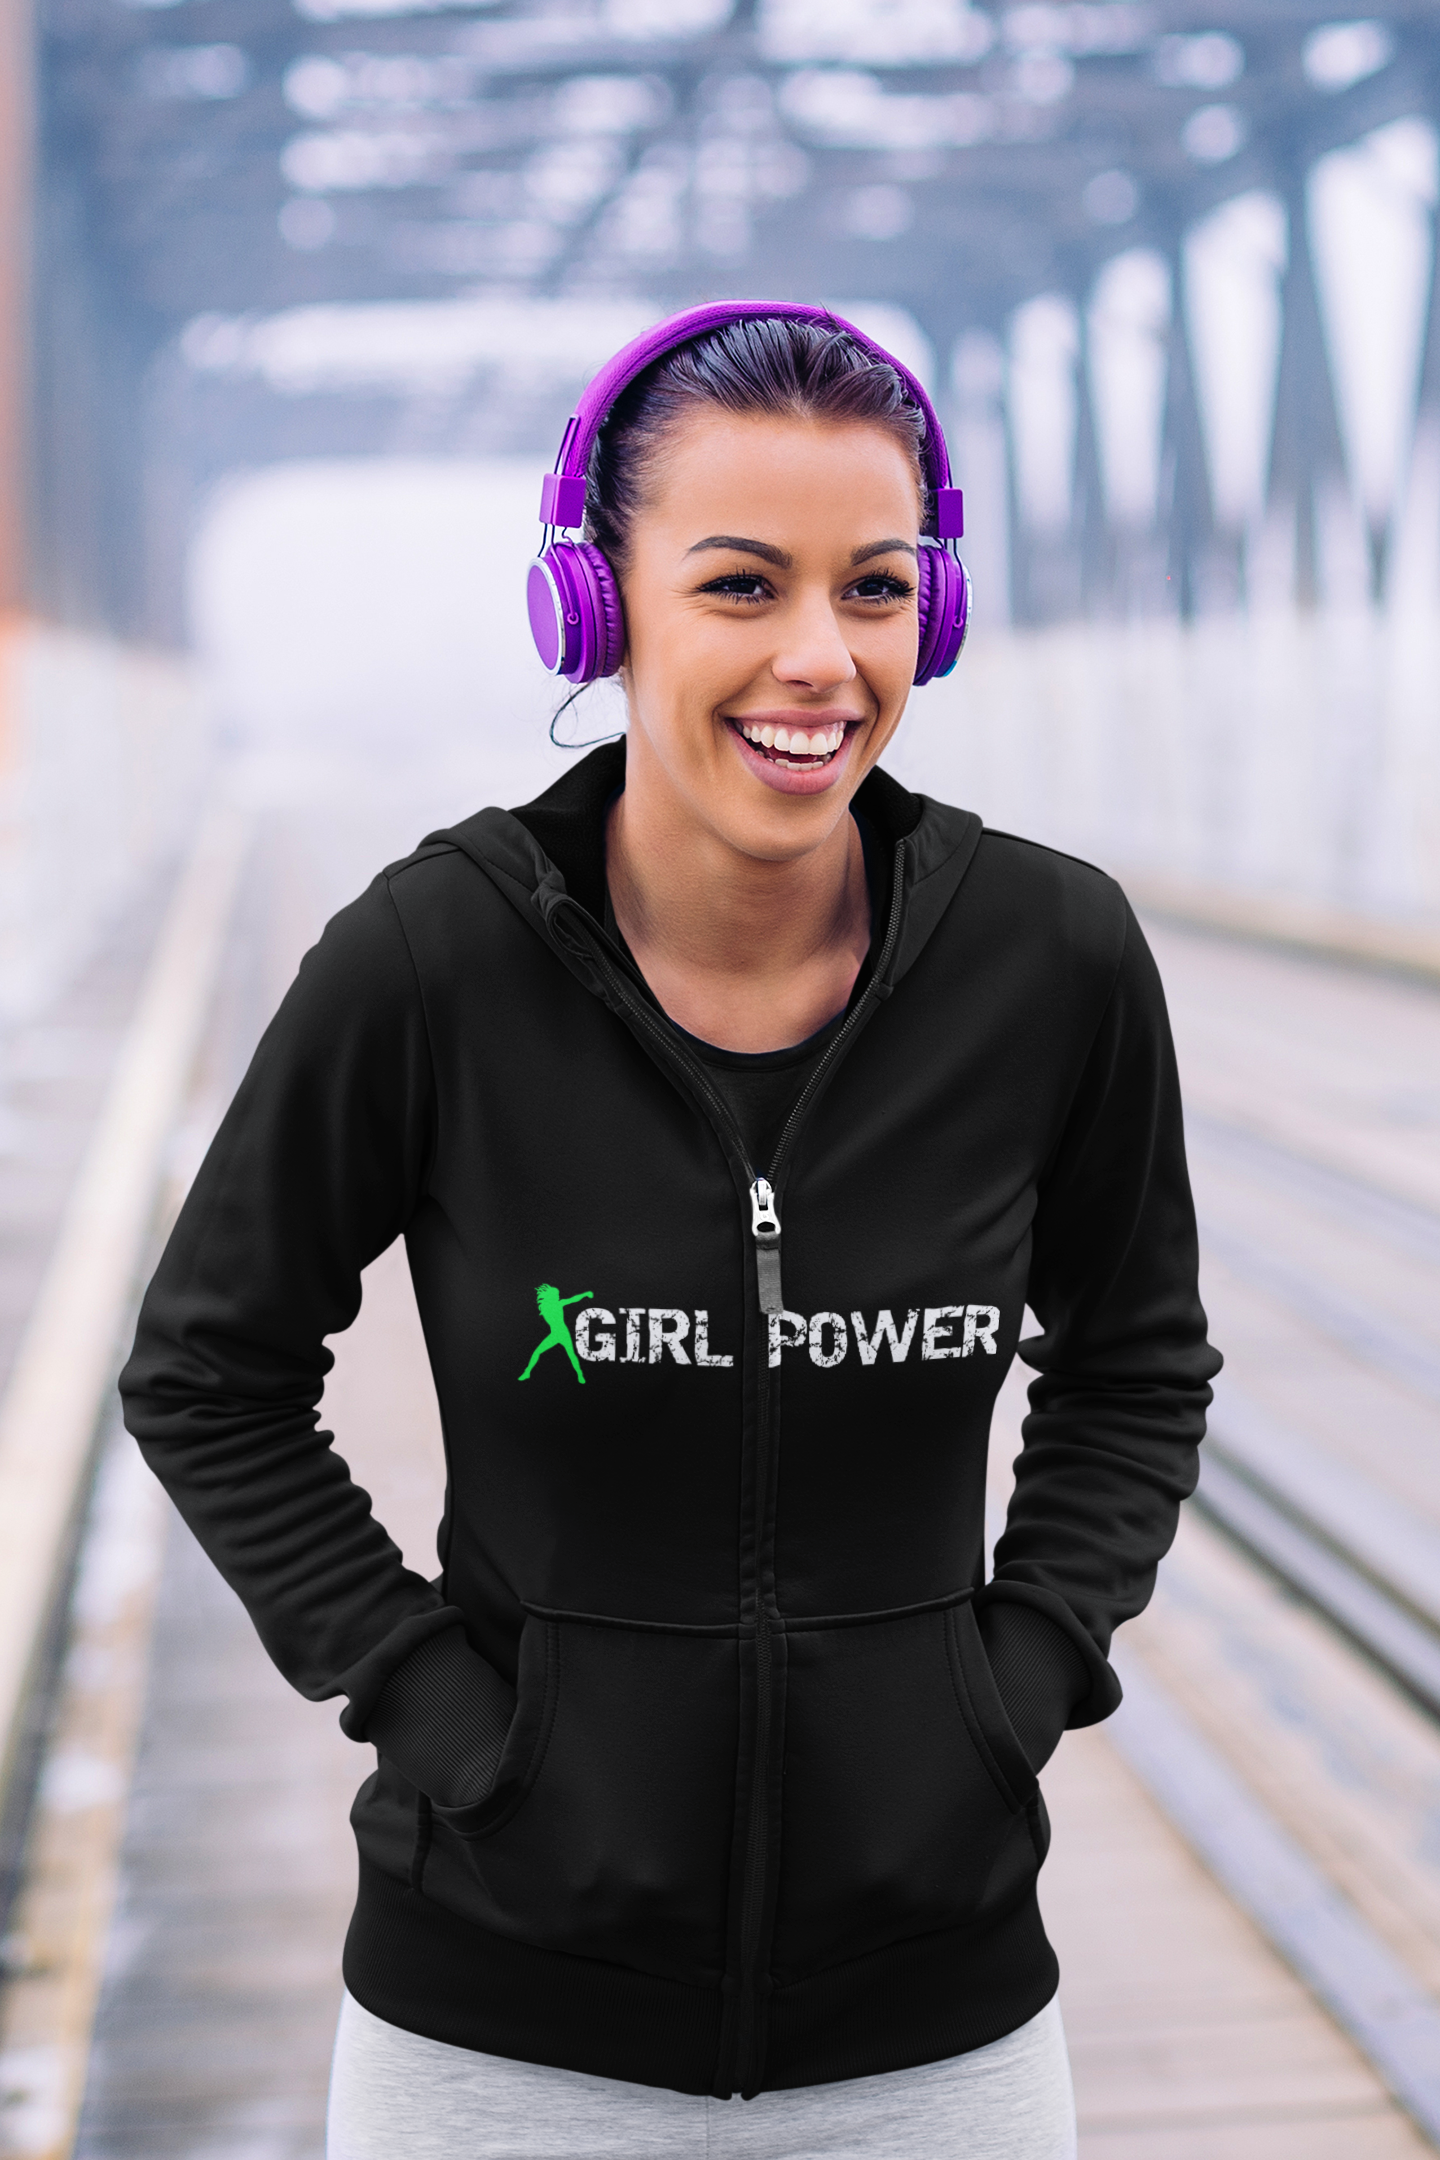 GIRL POWER - FIGHT LIKE A GIRL - TRY TO KEEP UP Premium Heavy Blend™ Zip Hoodie Sweatshirt